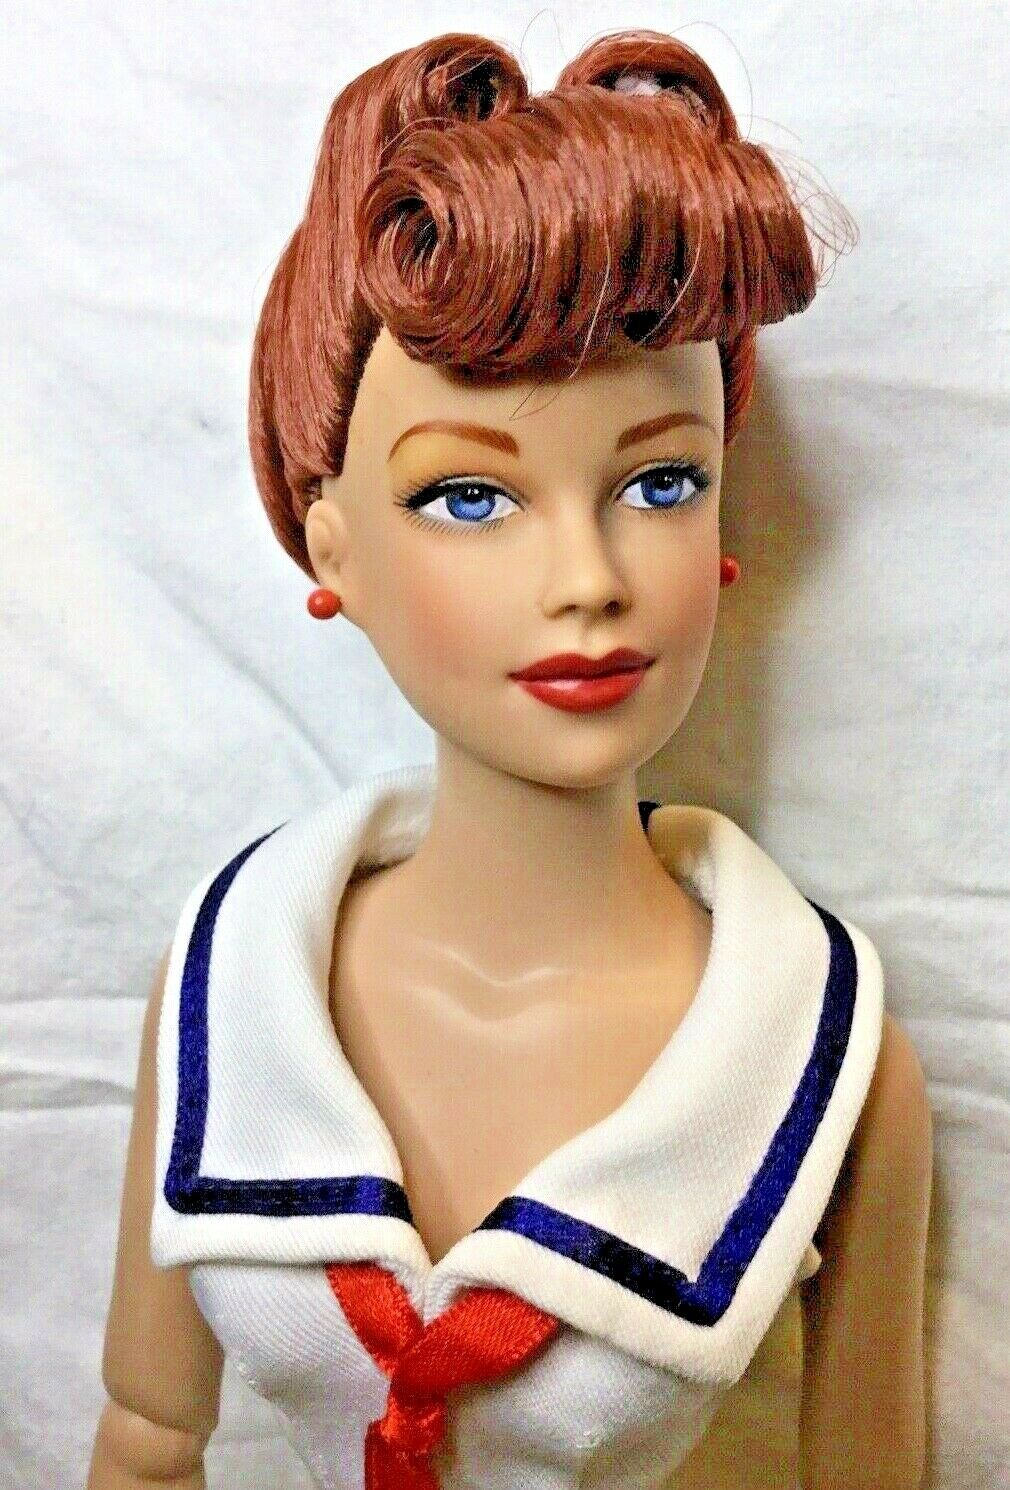 Tonner High Seas Basic Brenda Starr 2007 Le1000 Sailor Romper 16" Fashion Doll